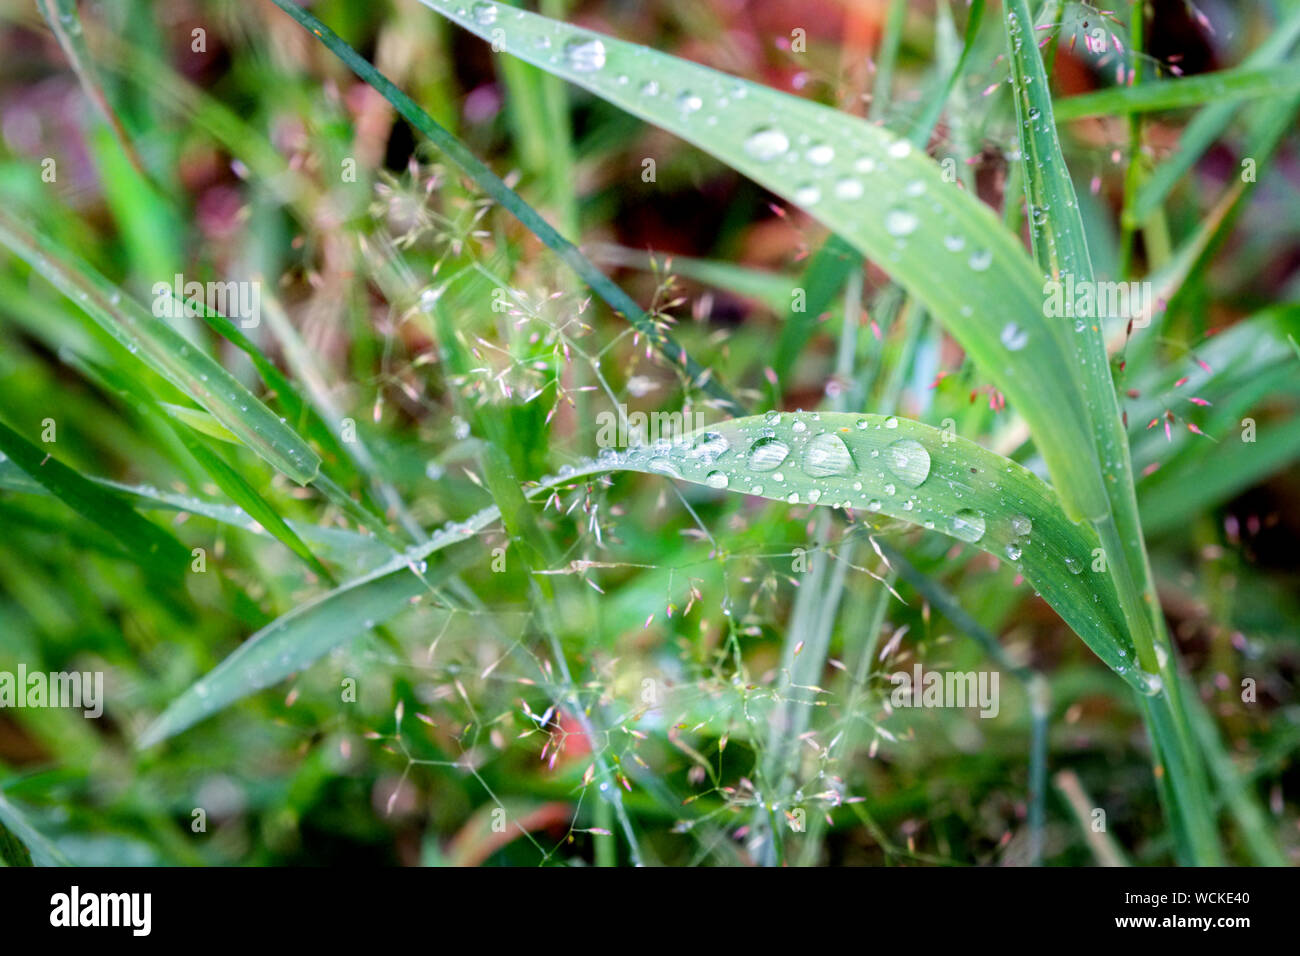 Summer rain drops on a blade of grass Stock Photo